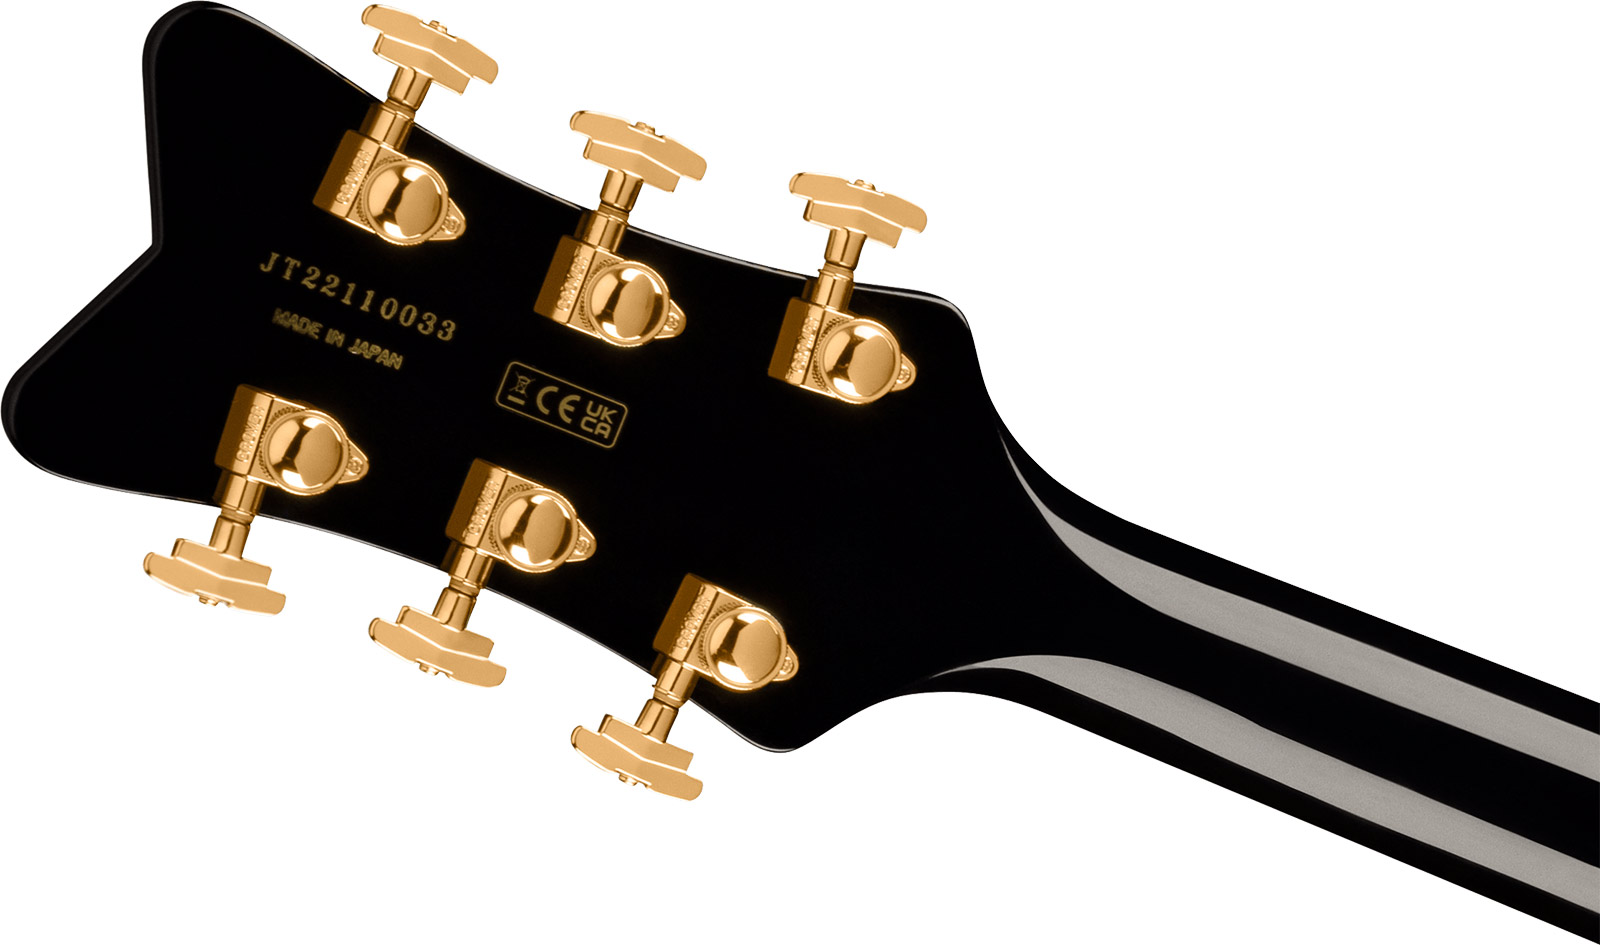 Gretsch G6134tg Paisley Penguin Bigsby Pro Jap 2h Trem Eb - Black Paisley - Single cut electric guitar - Variation 3